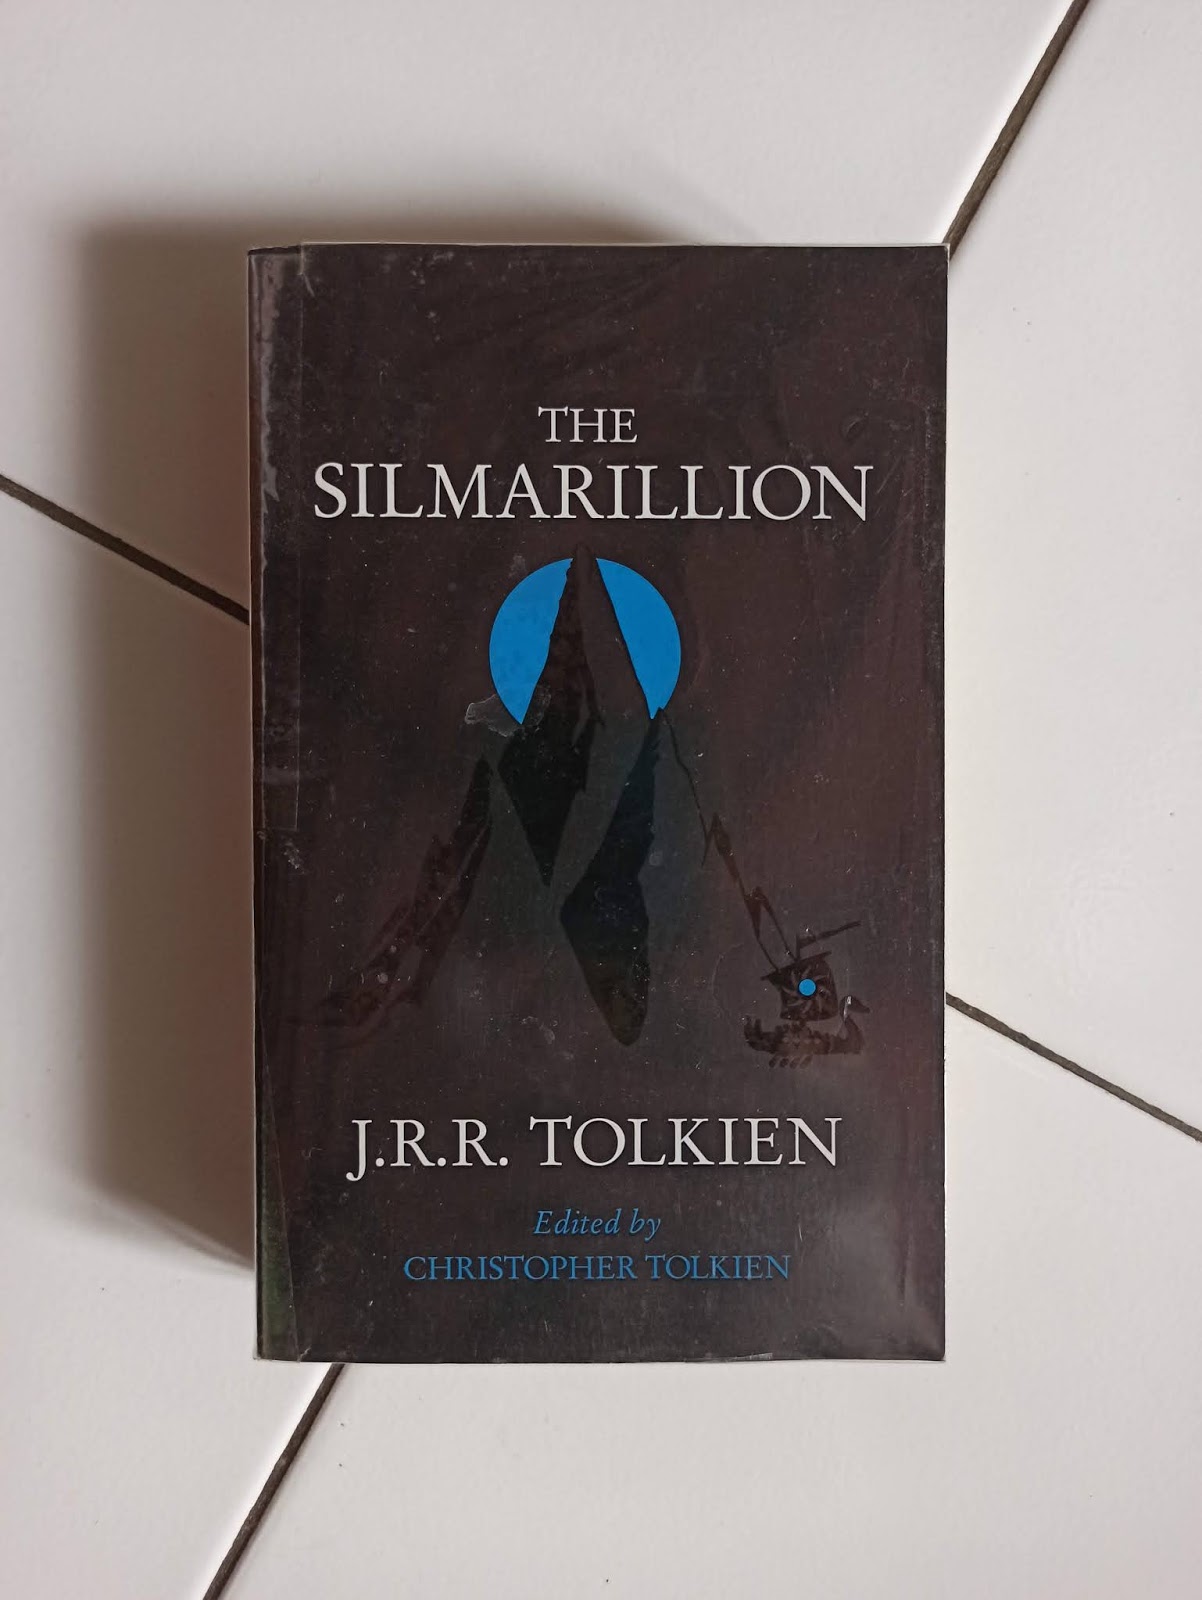 Preloved The Silmarillion A Novel by J.R.R. Tolkien